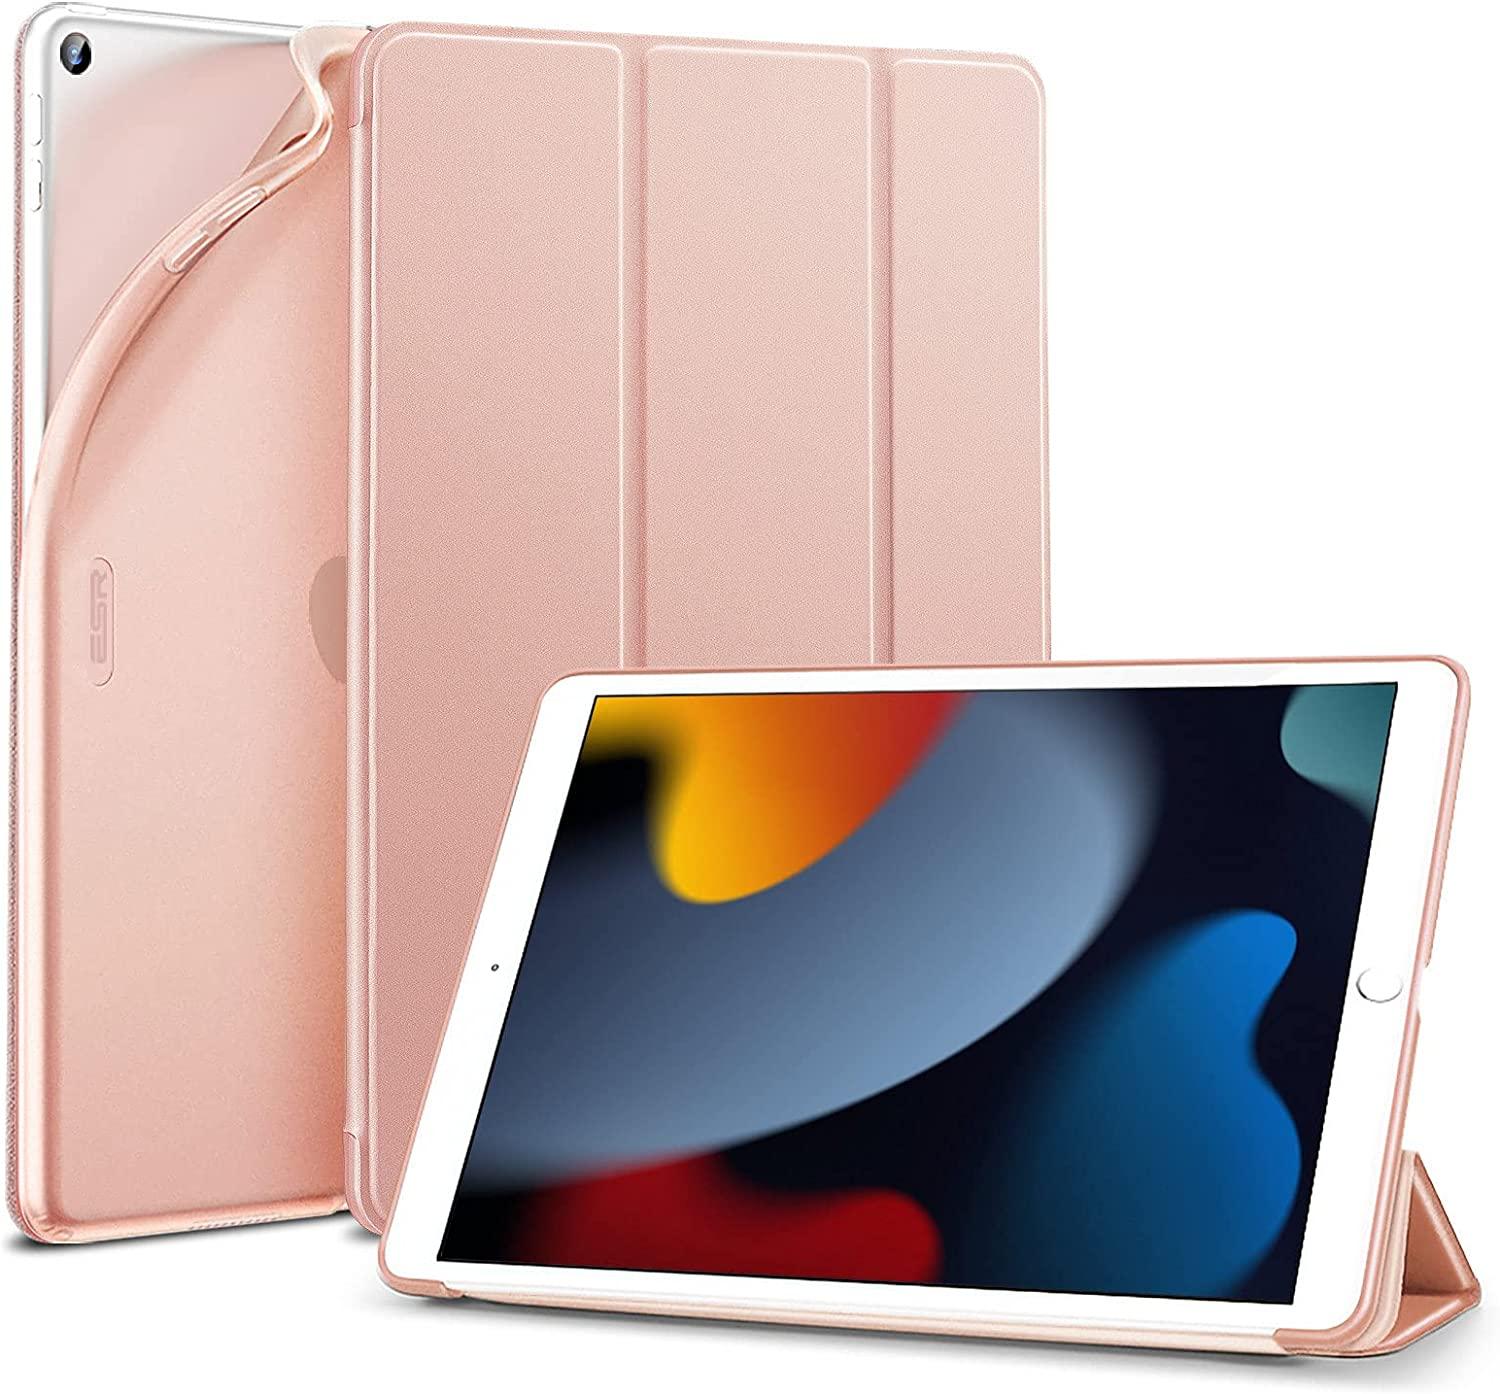 Apple iPad Case by ESR for $4.39